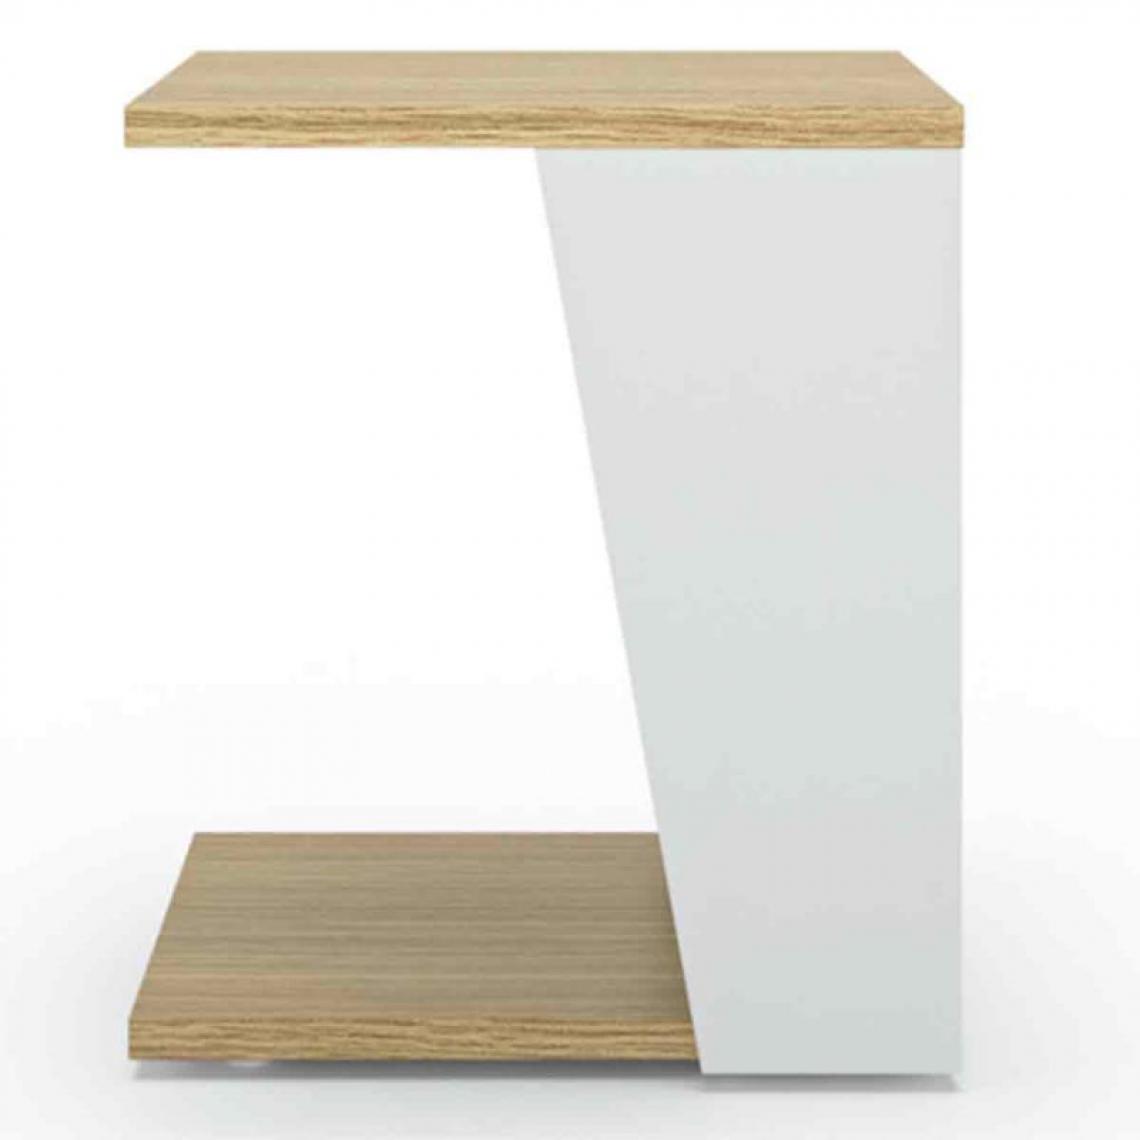 Temahome - Table d'appoint ALBI - chêne clair et blanc laqué - Tables basses